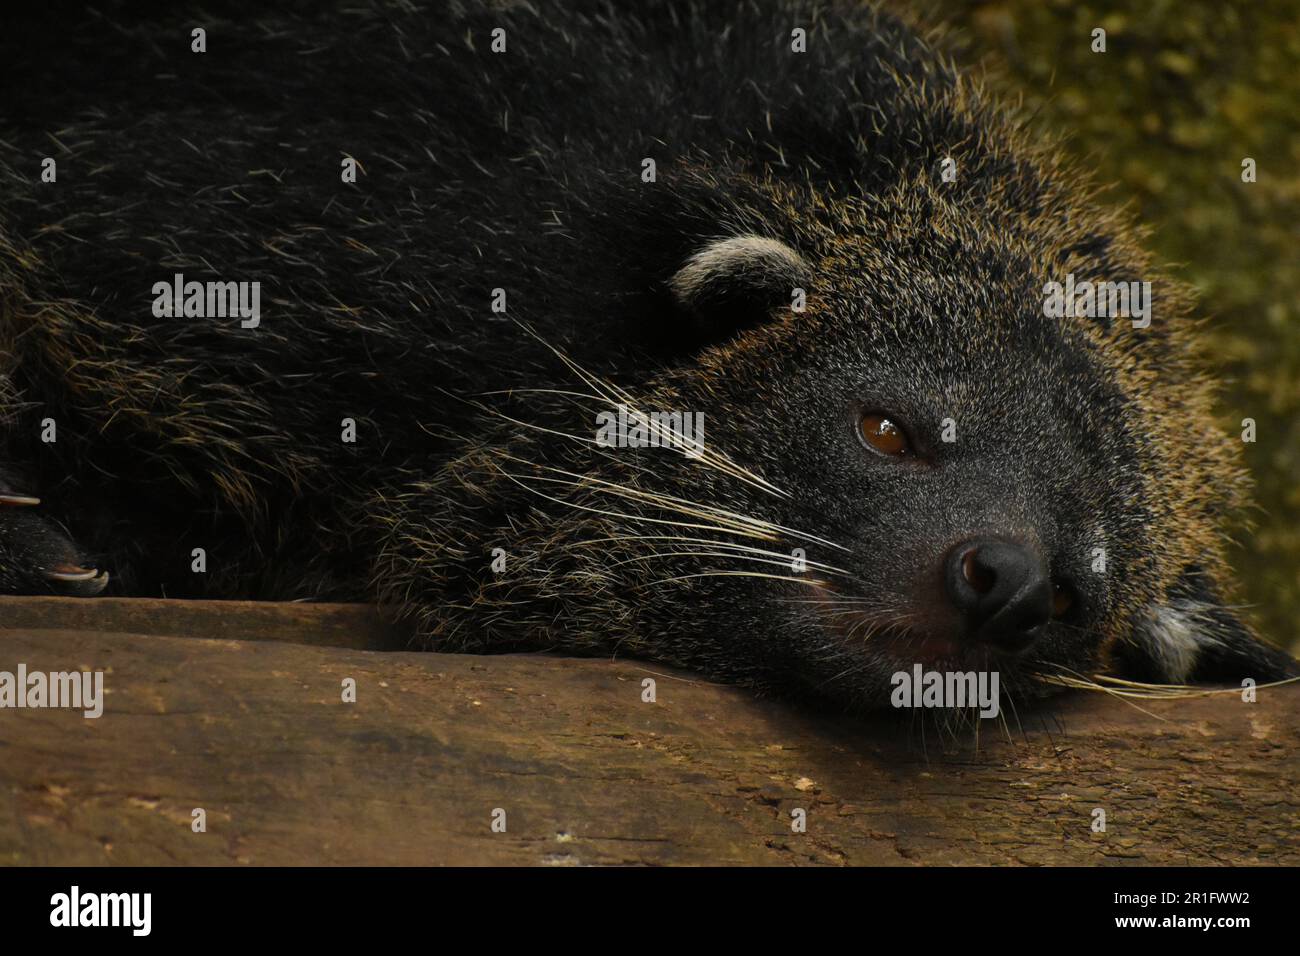 Asian bearcat taking a nap on wooden log. Taman Safari, Prigen, East Java, Indonesia. Stock Photo